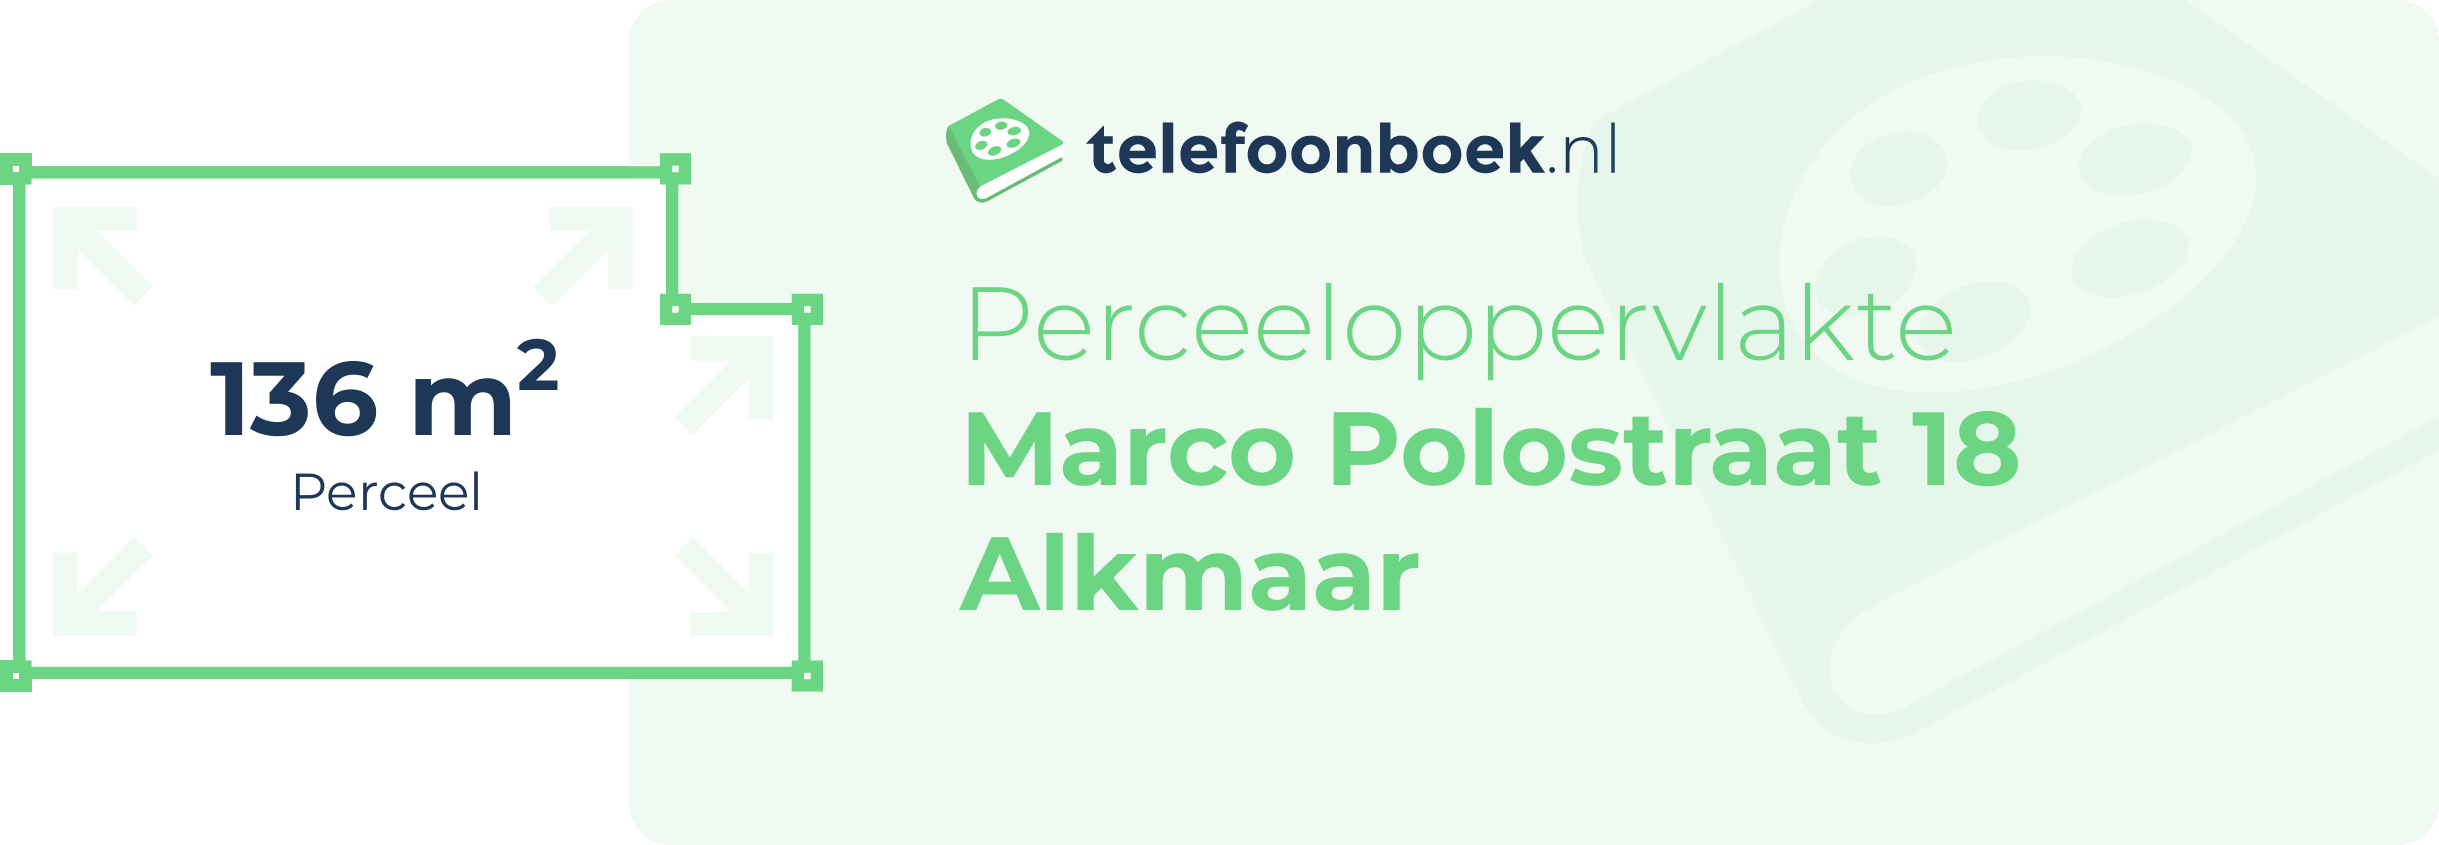 Perceeloppervlakte Marco Polostraat 18 Alkmaar